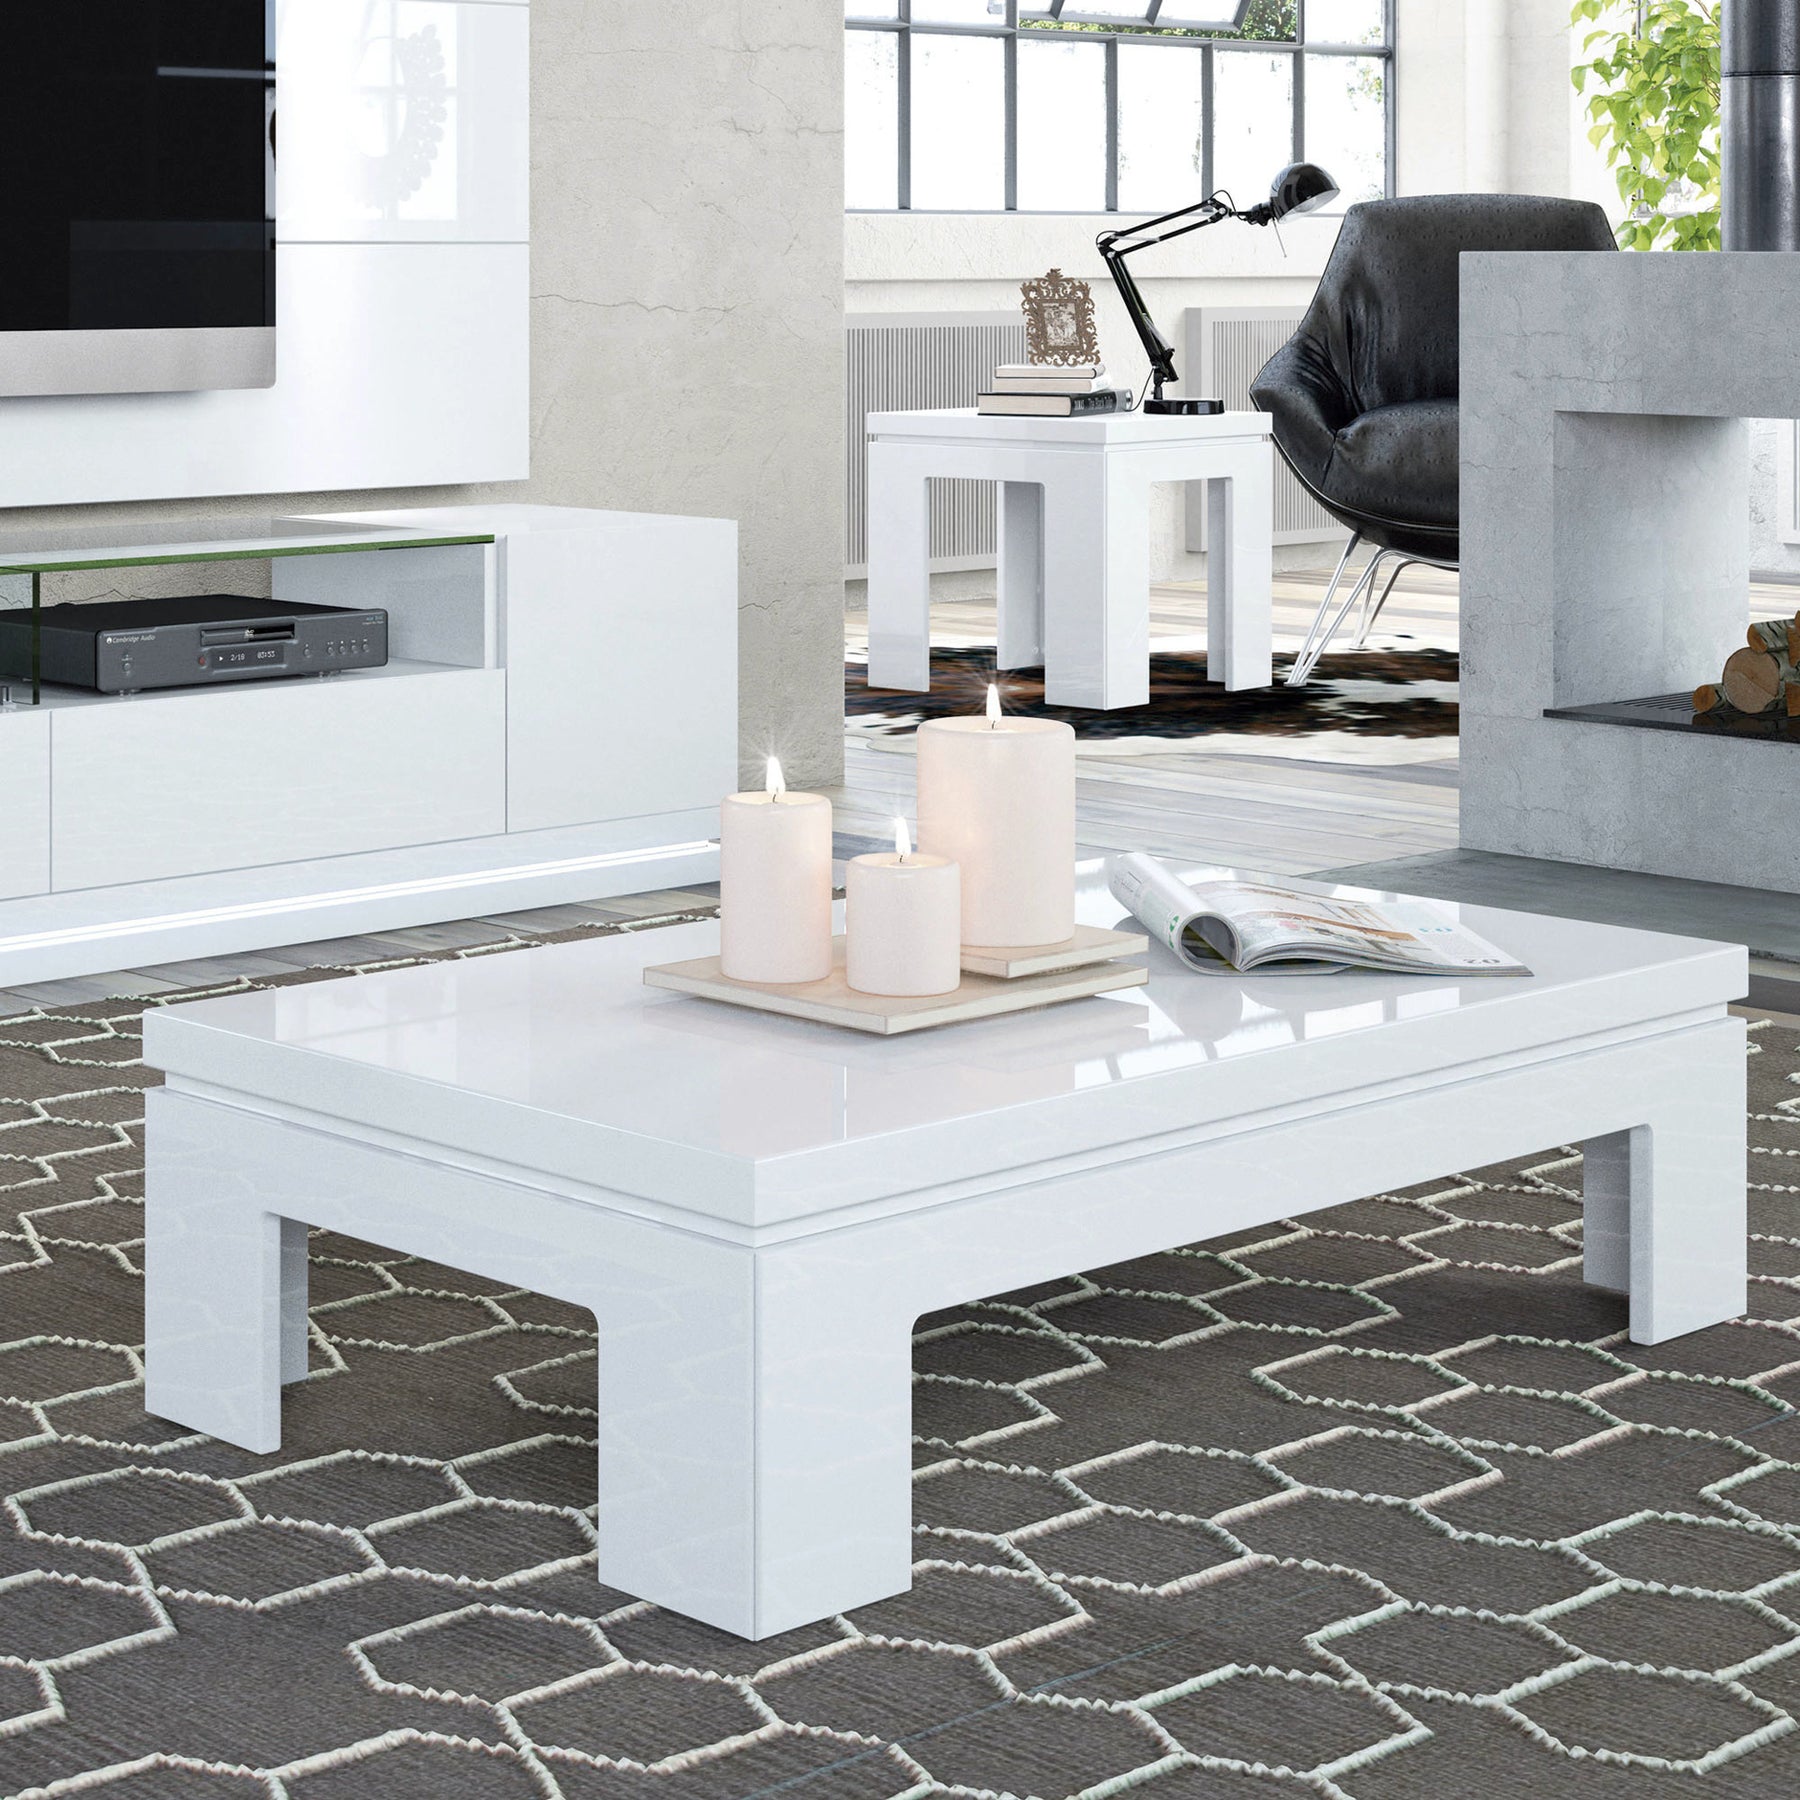 Manhattan Comfort Bridge 2-Piece Accent Table Living Room Set in White Gloss-Minimal & Modern